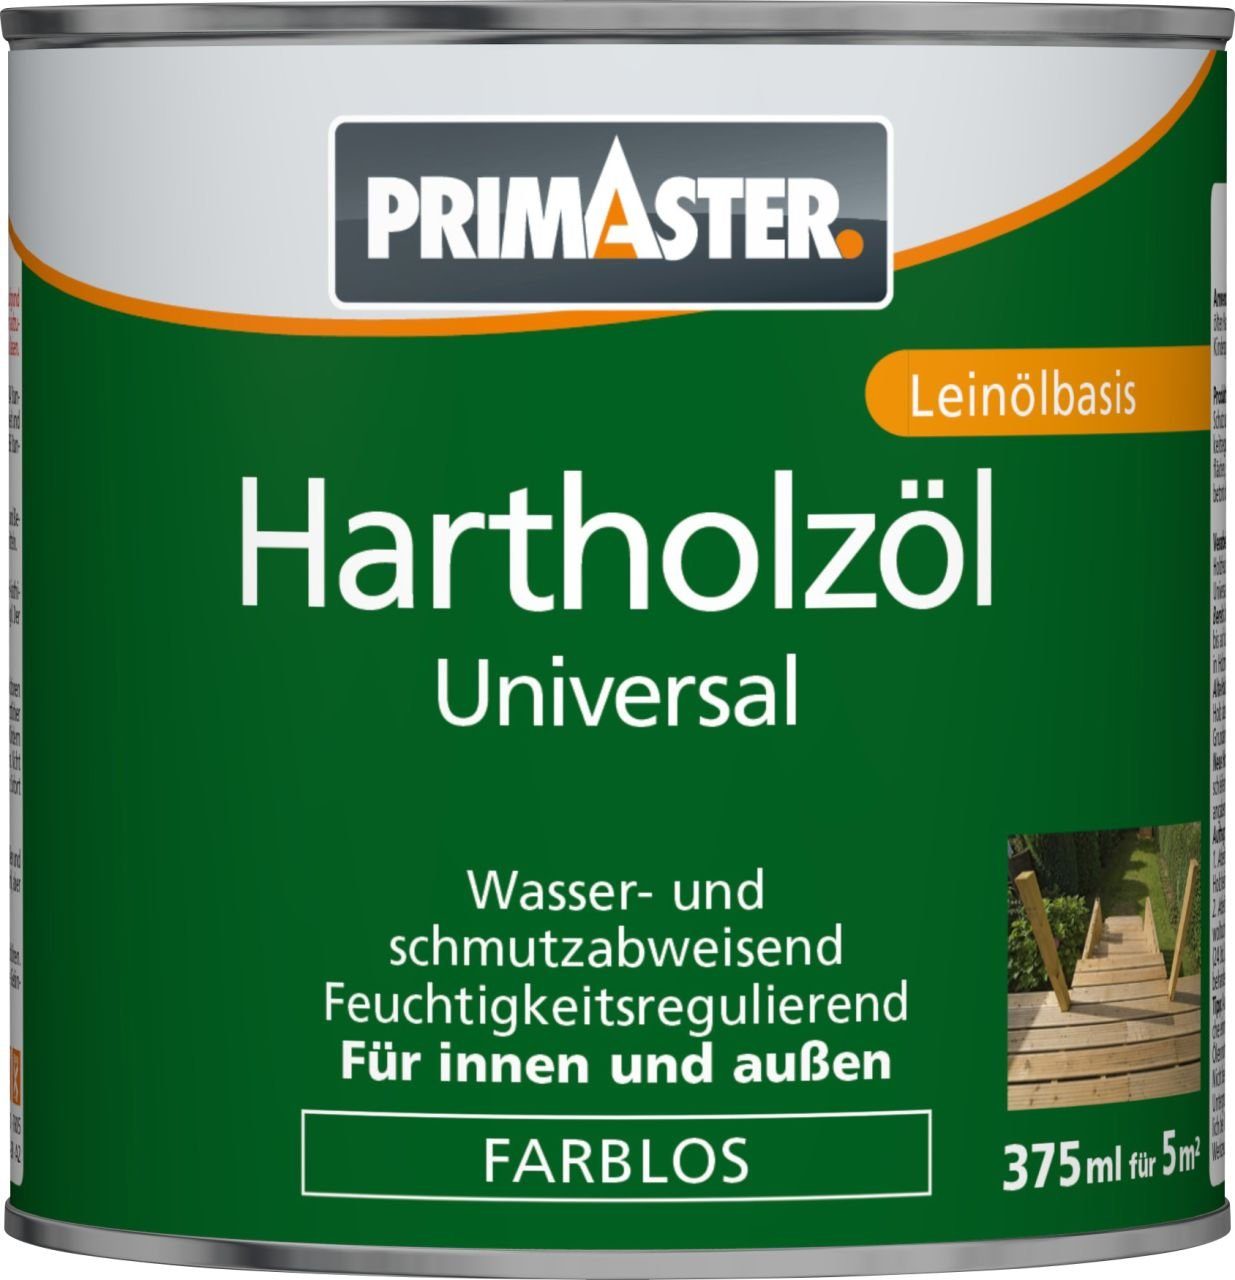 ml 375 Hartholzöl Universal Primaster Primaster farblos Hartholzöl